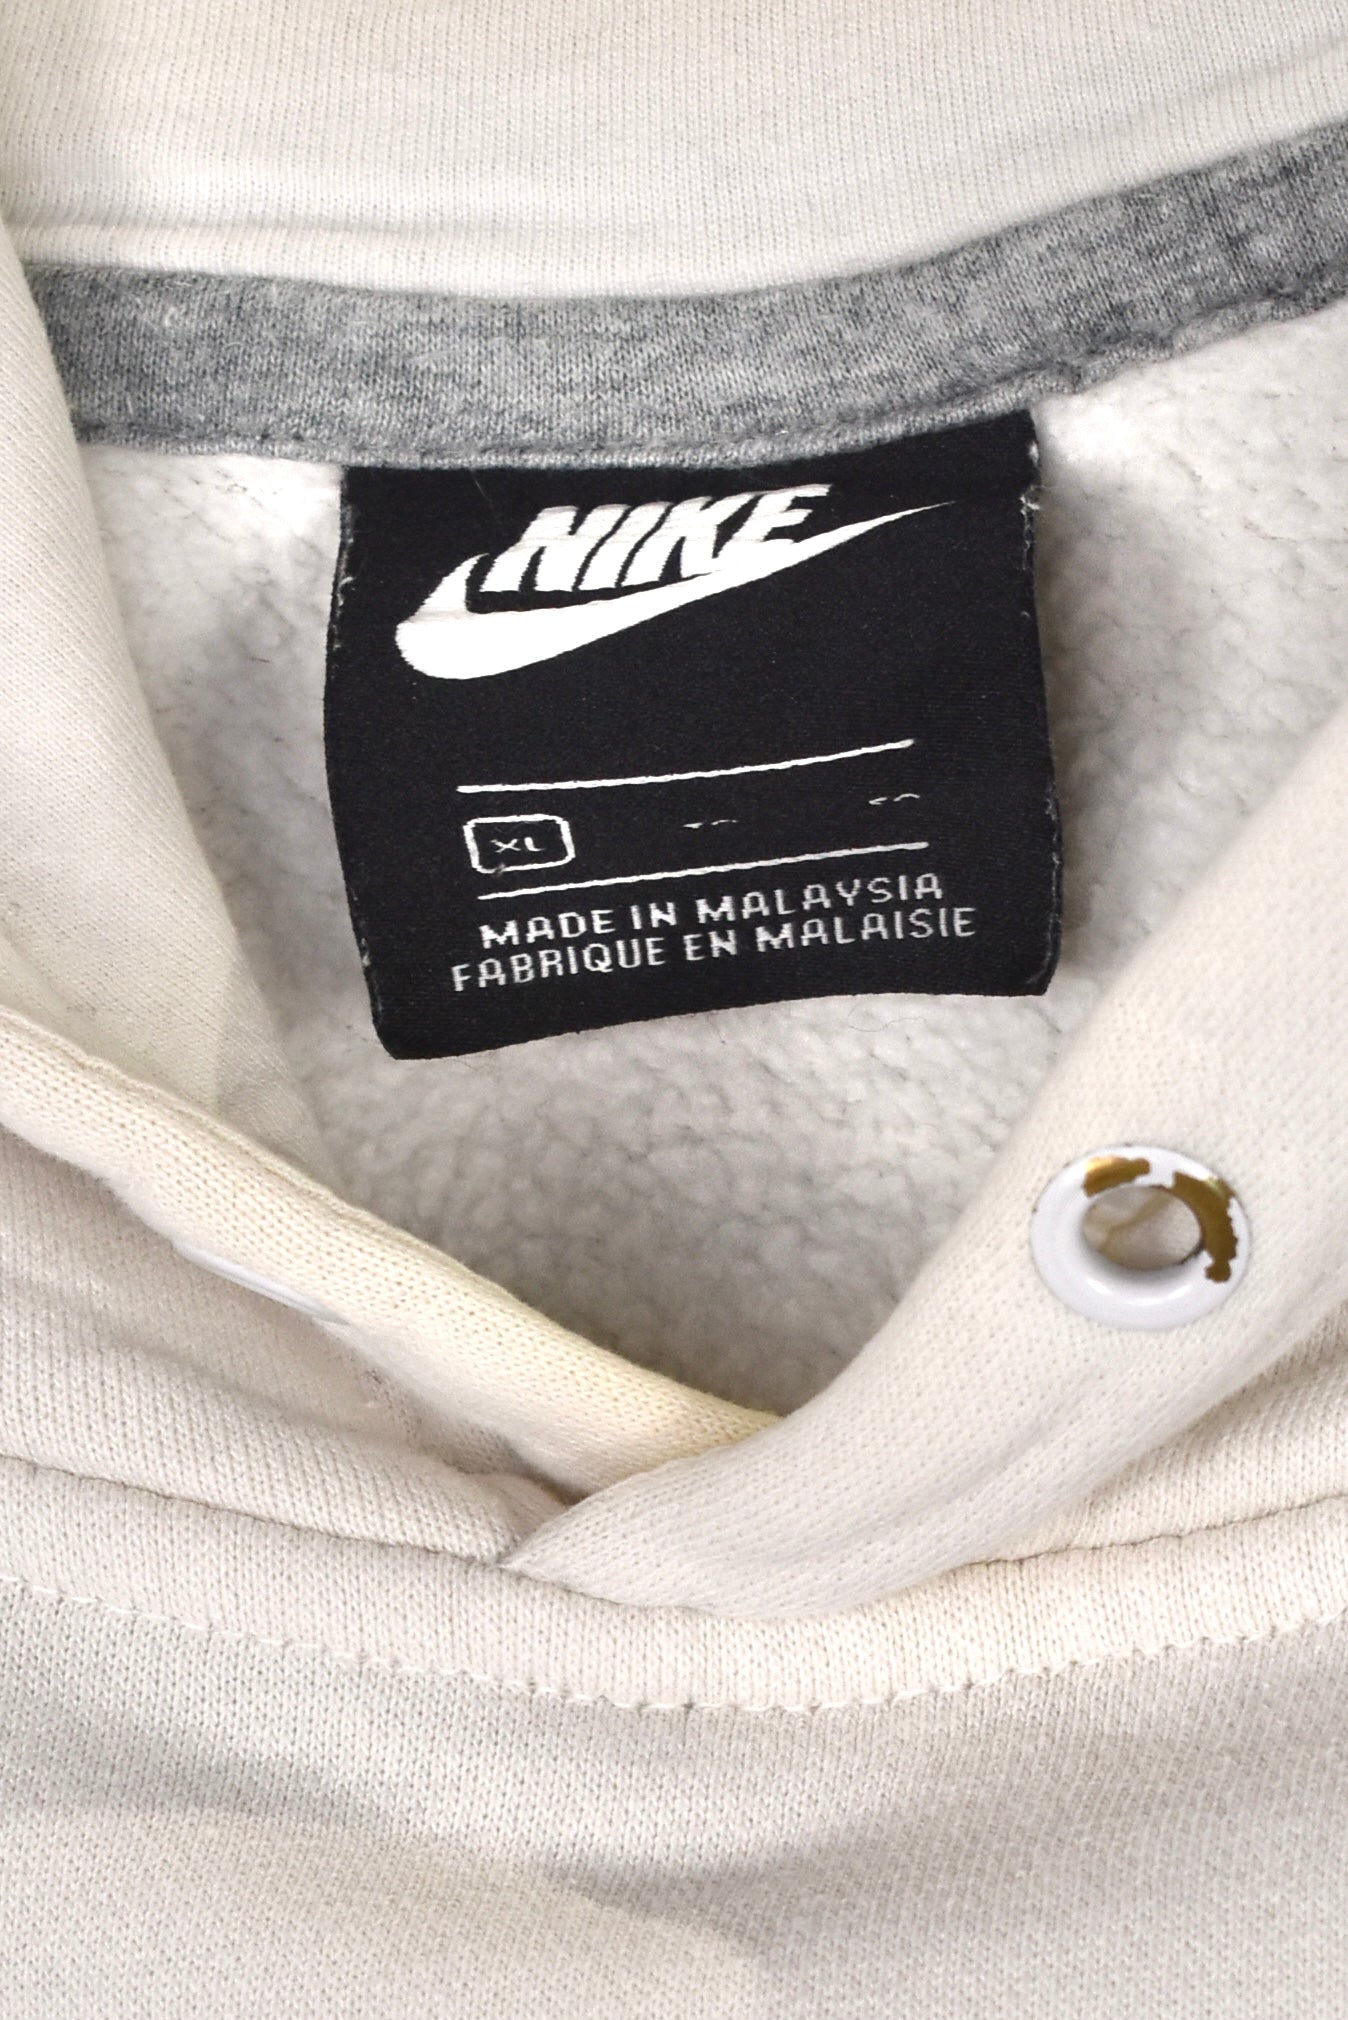 Vintage Nike hoodie (XL), white graphic sweatshirt